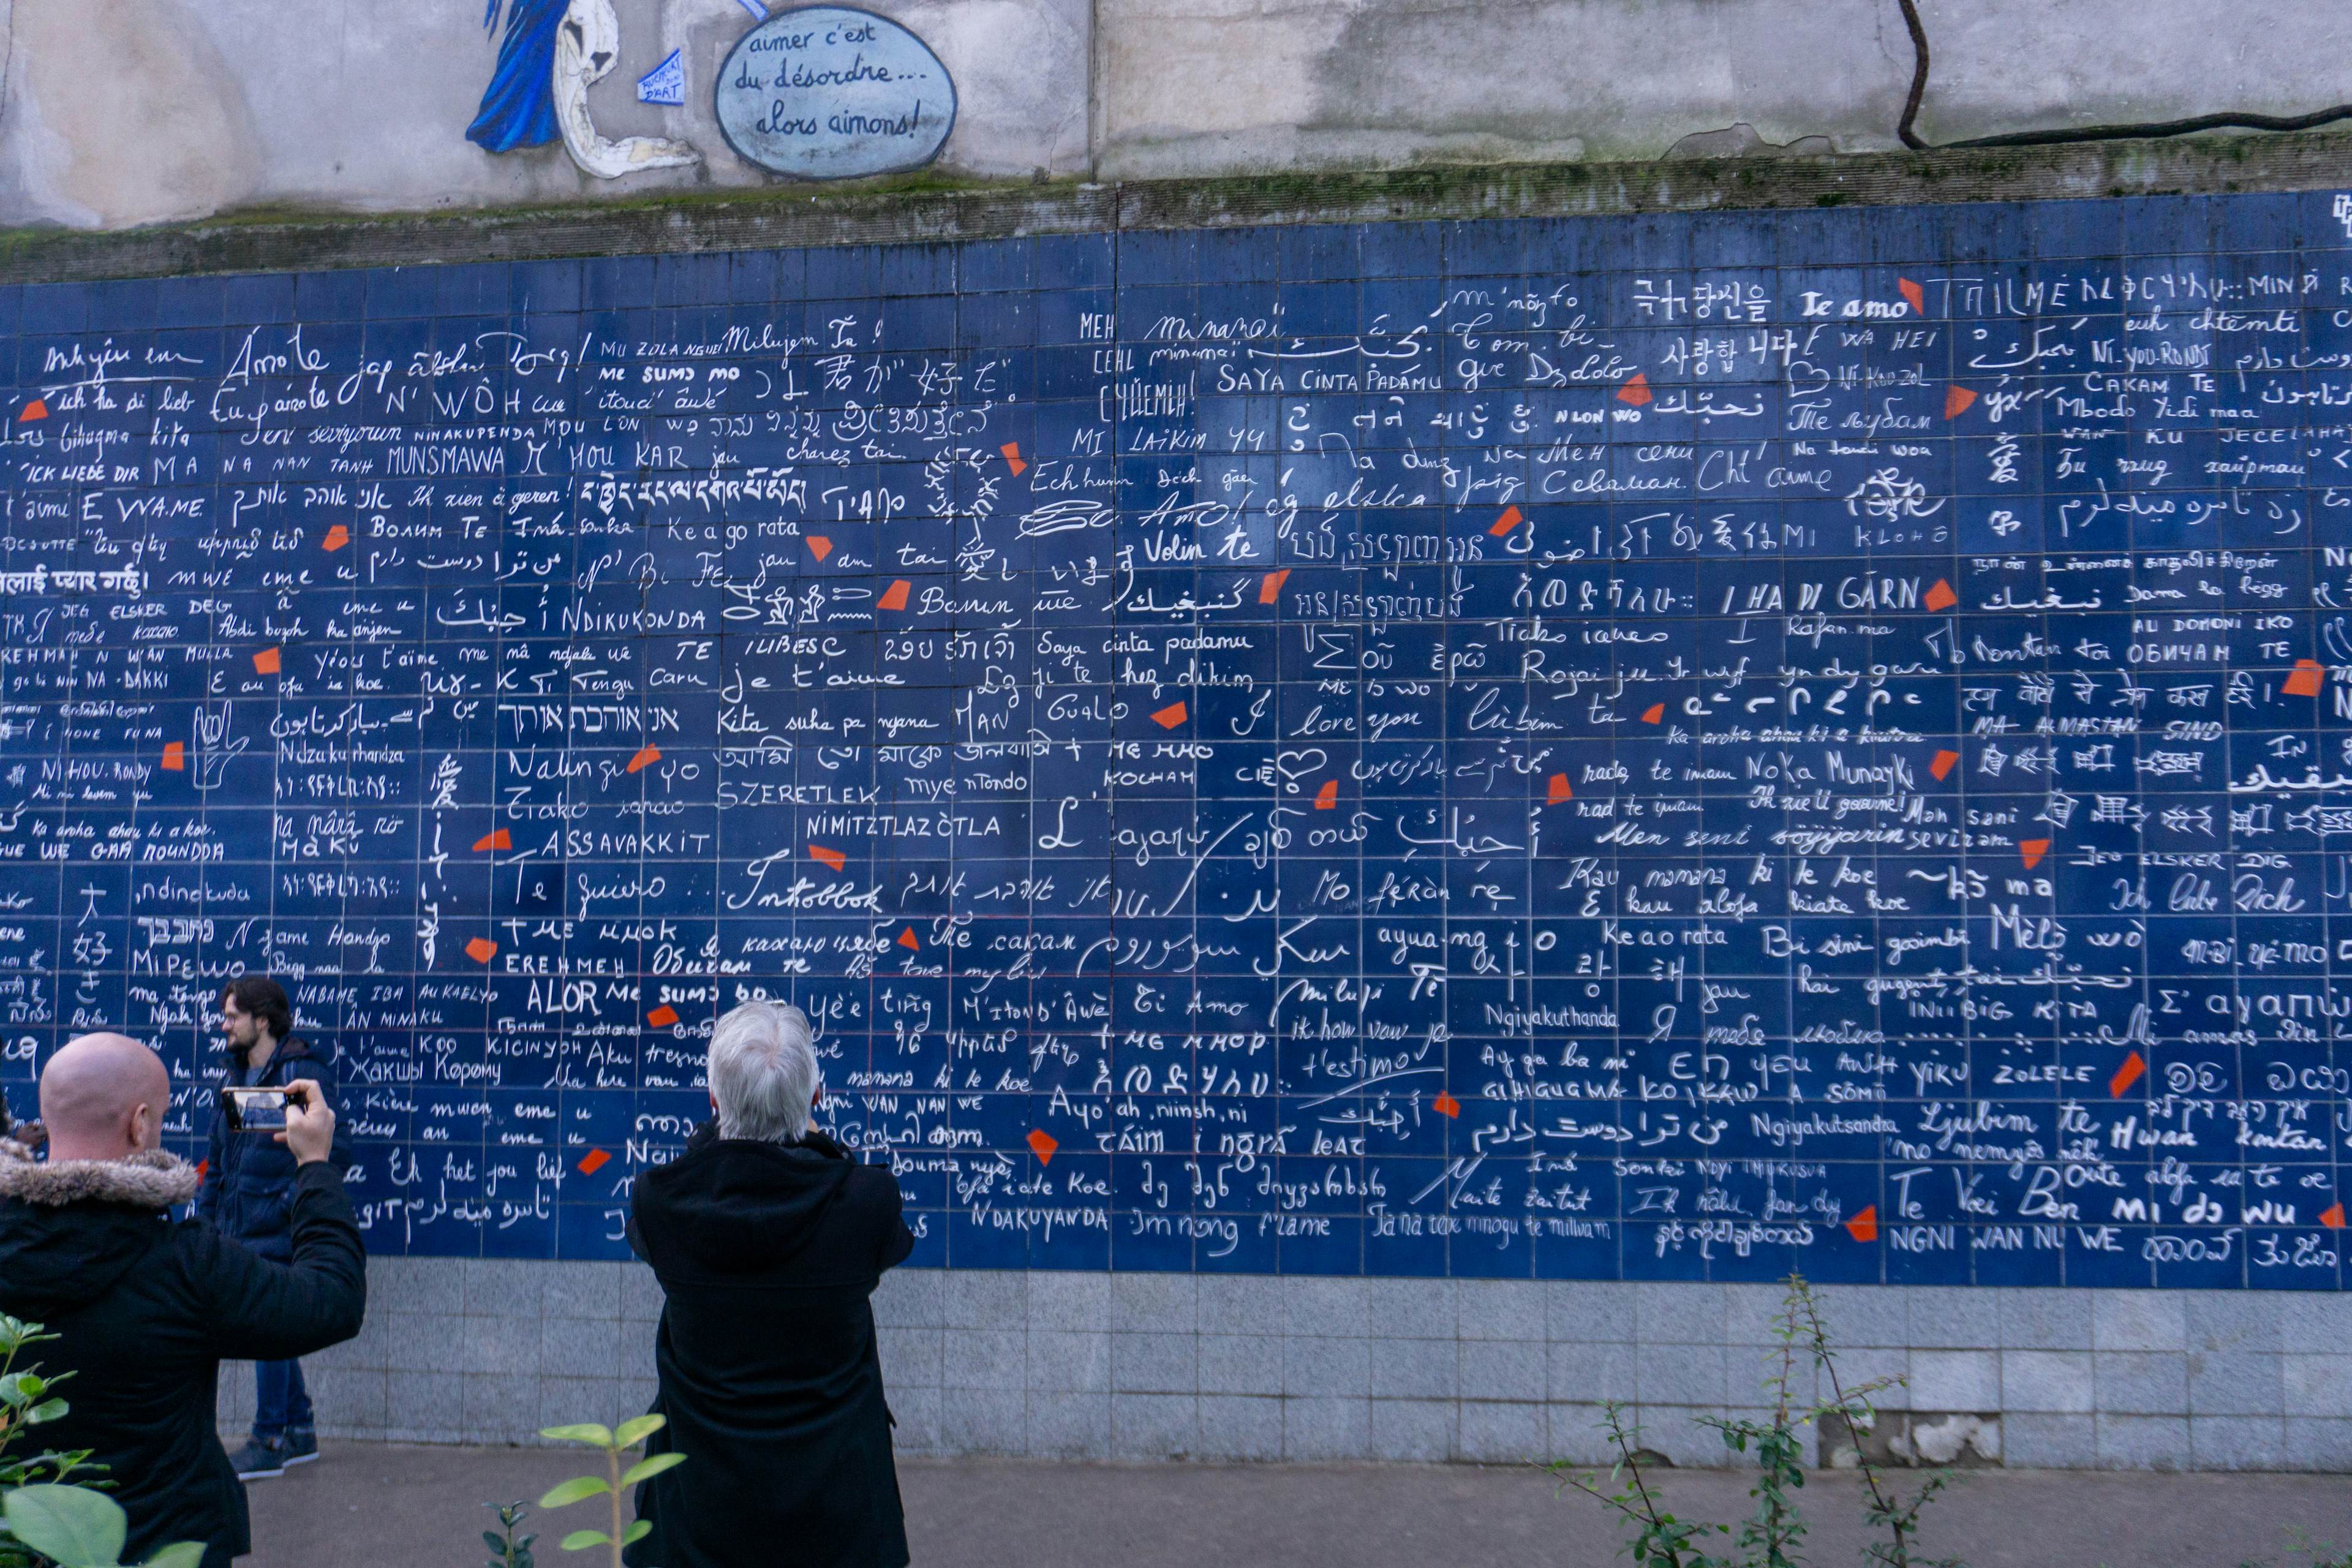 The Wall of Love (Le Mur de je t'aime)